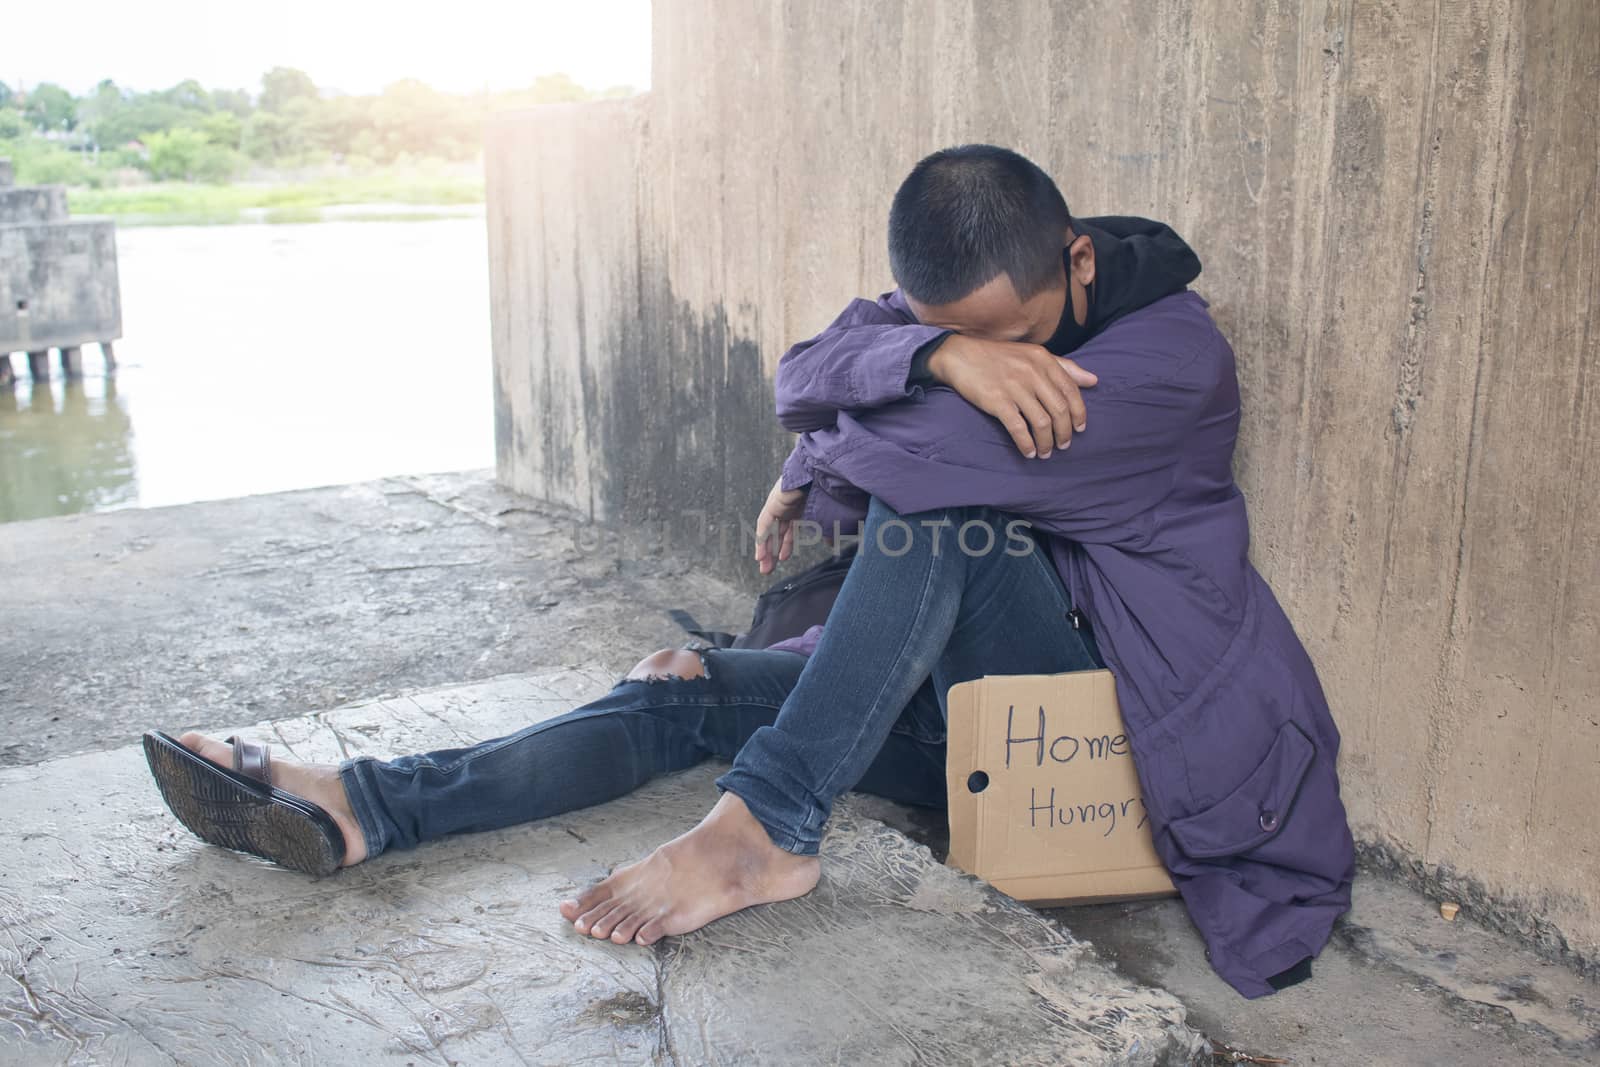 Unhappy homeless man under the bridge by Gobba17